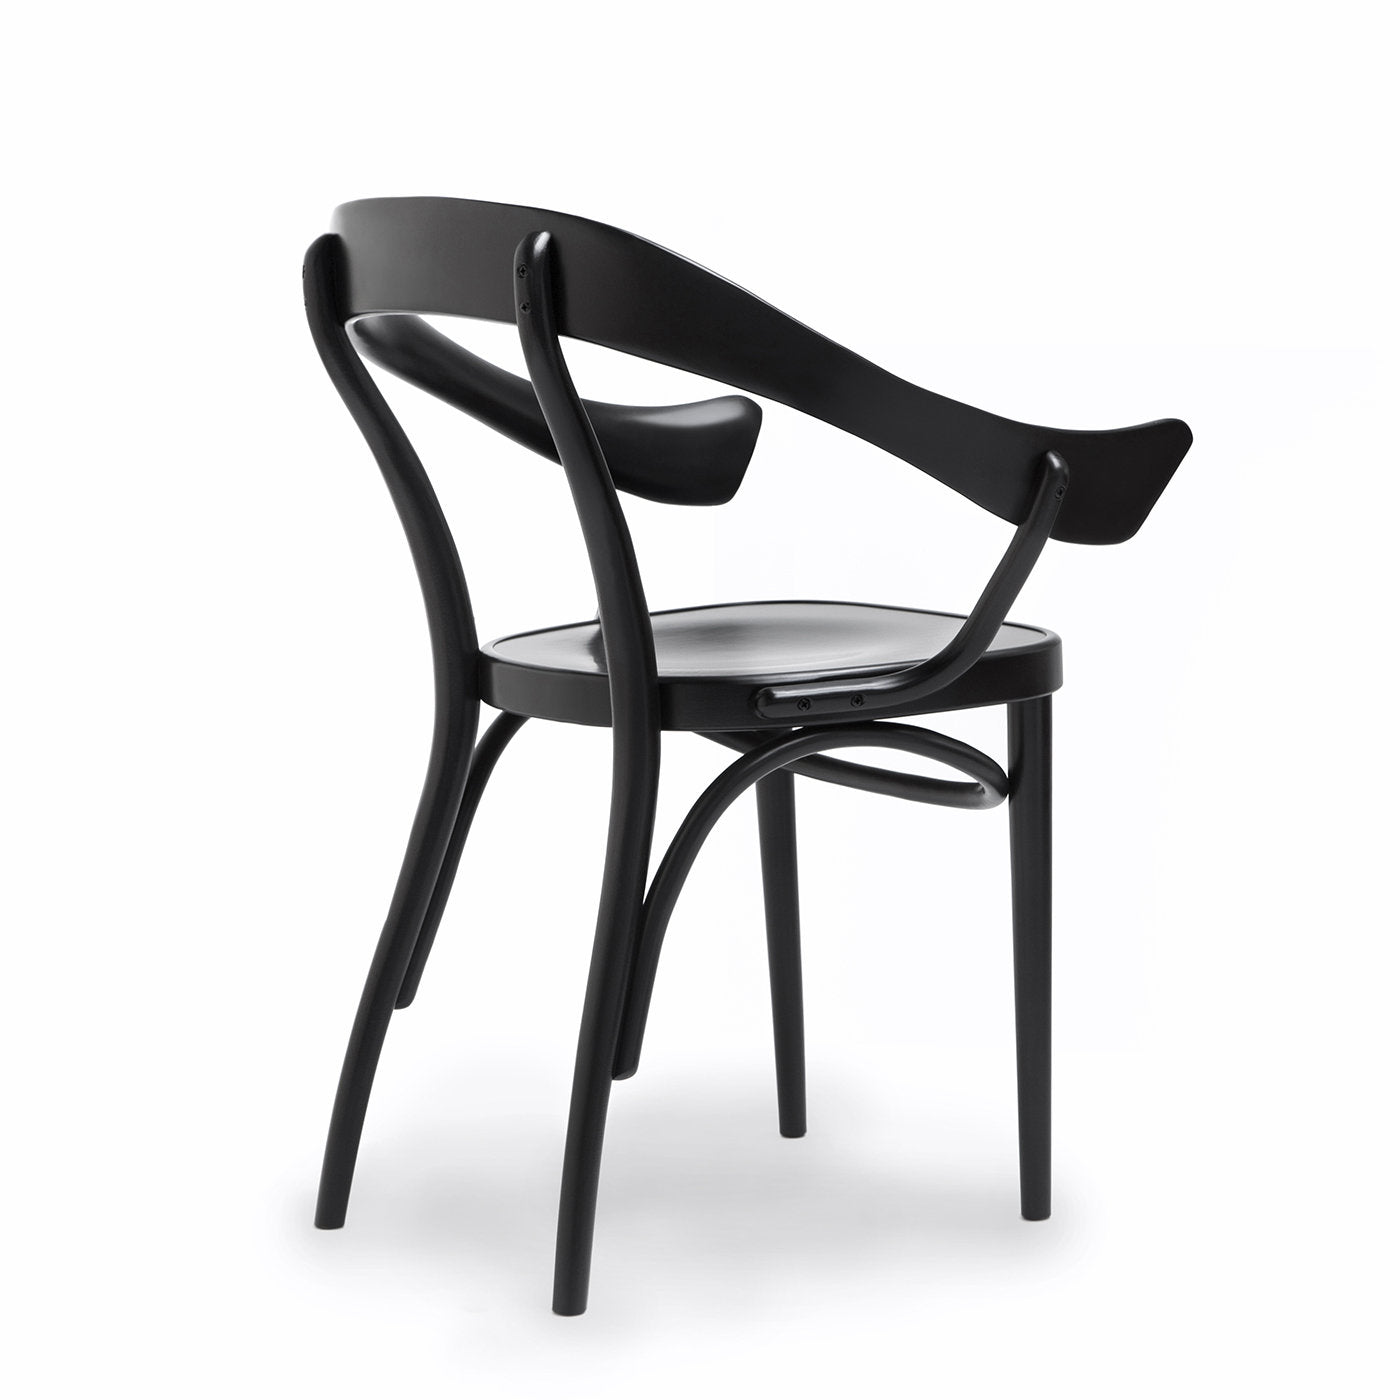 Bistrotstuhl Chair by Nigel Coates - Alternative view 2